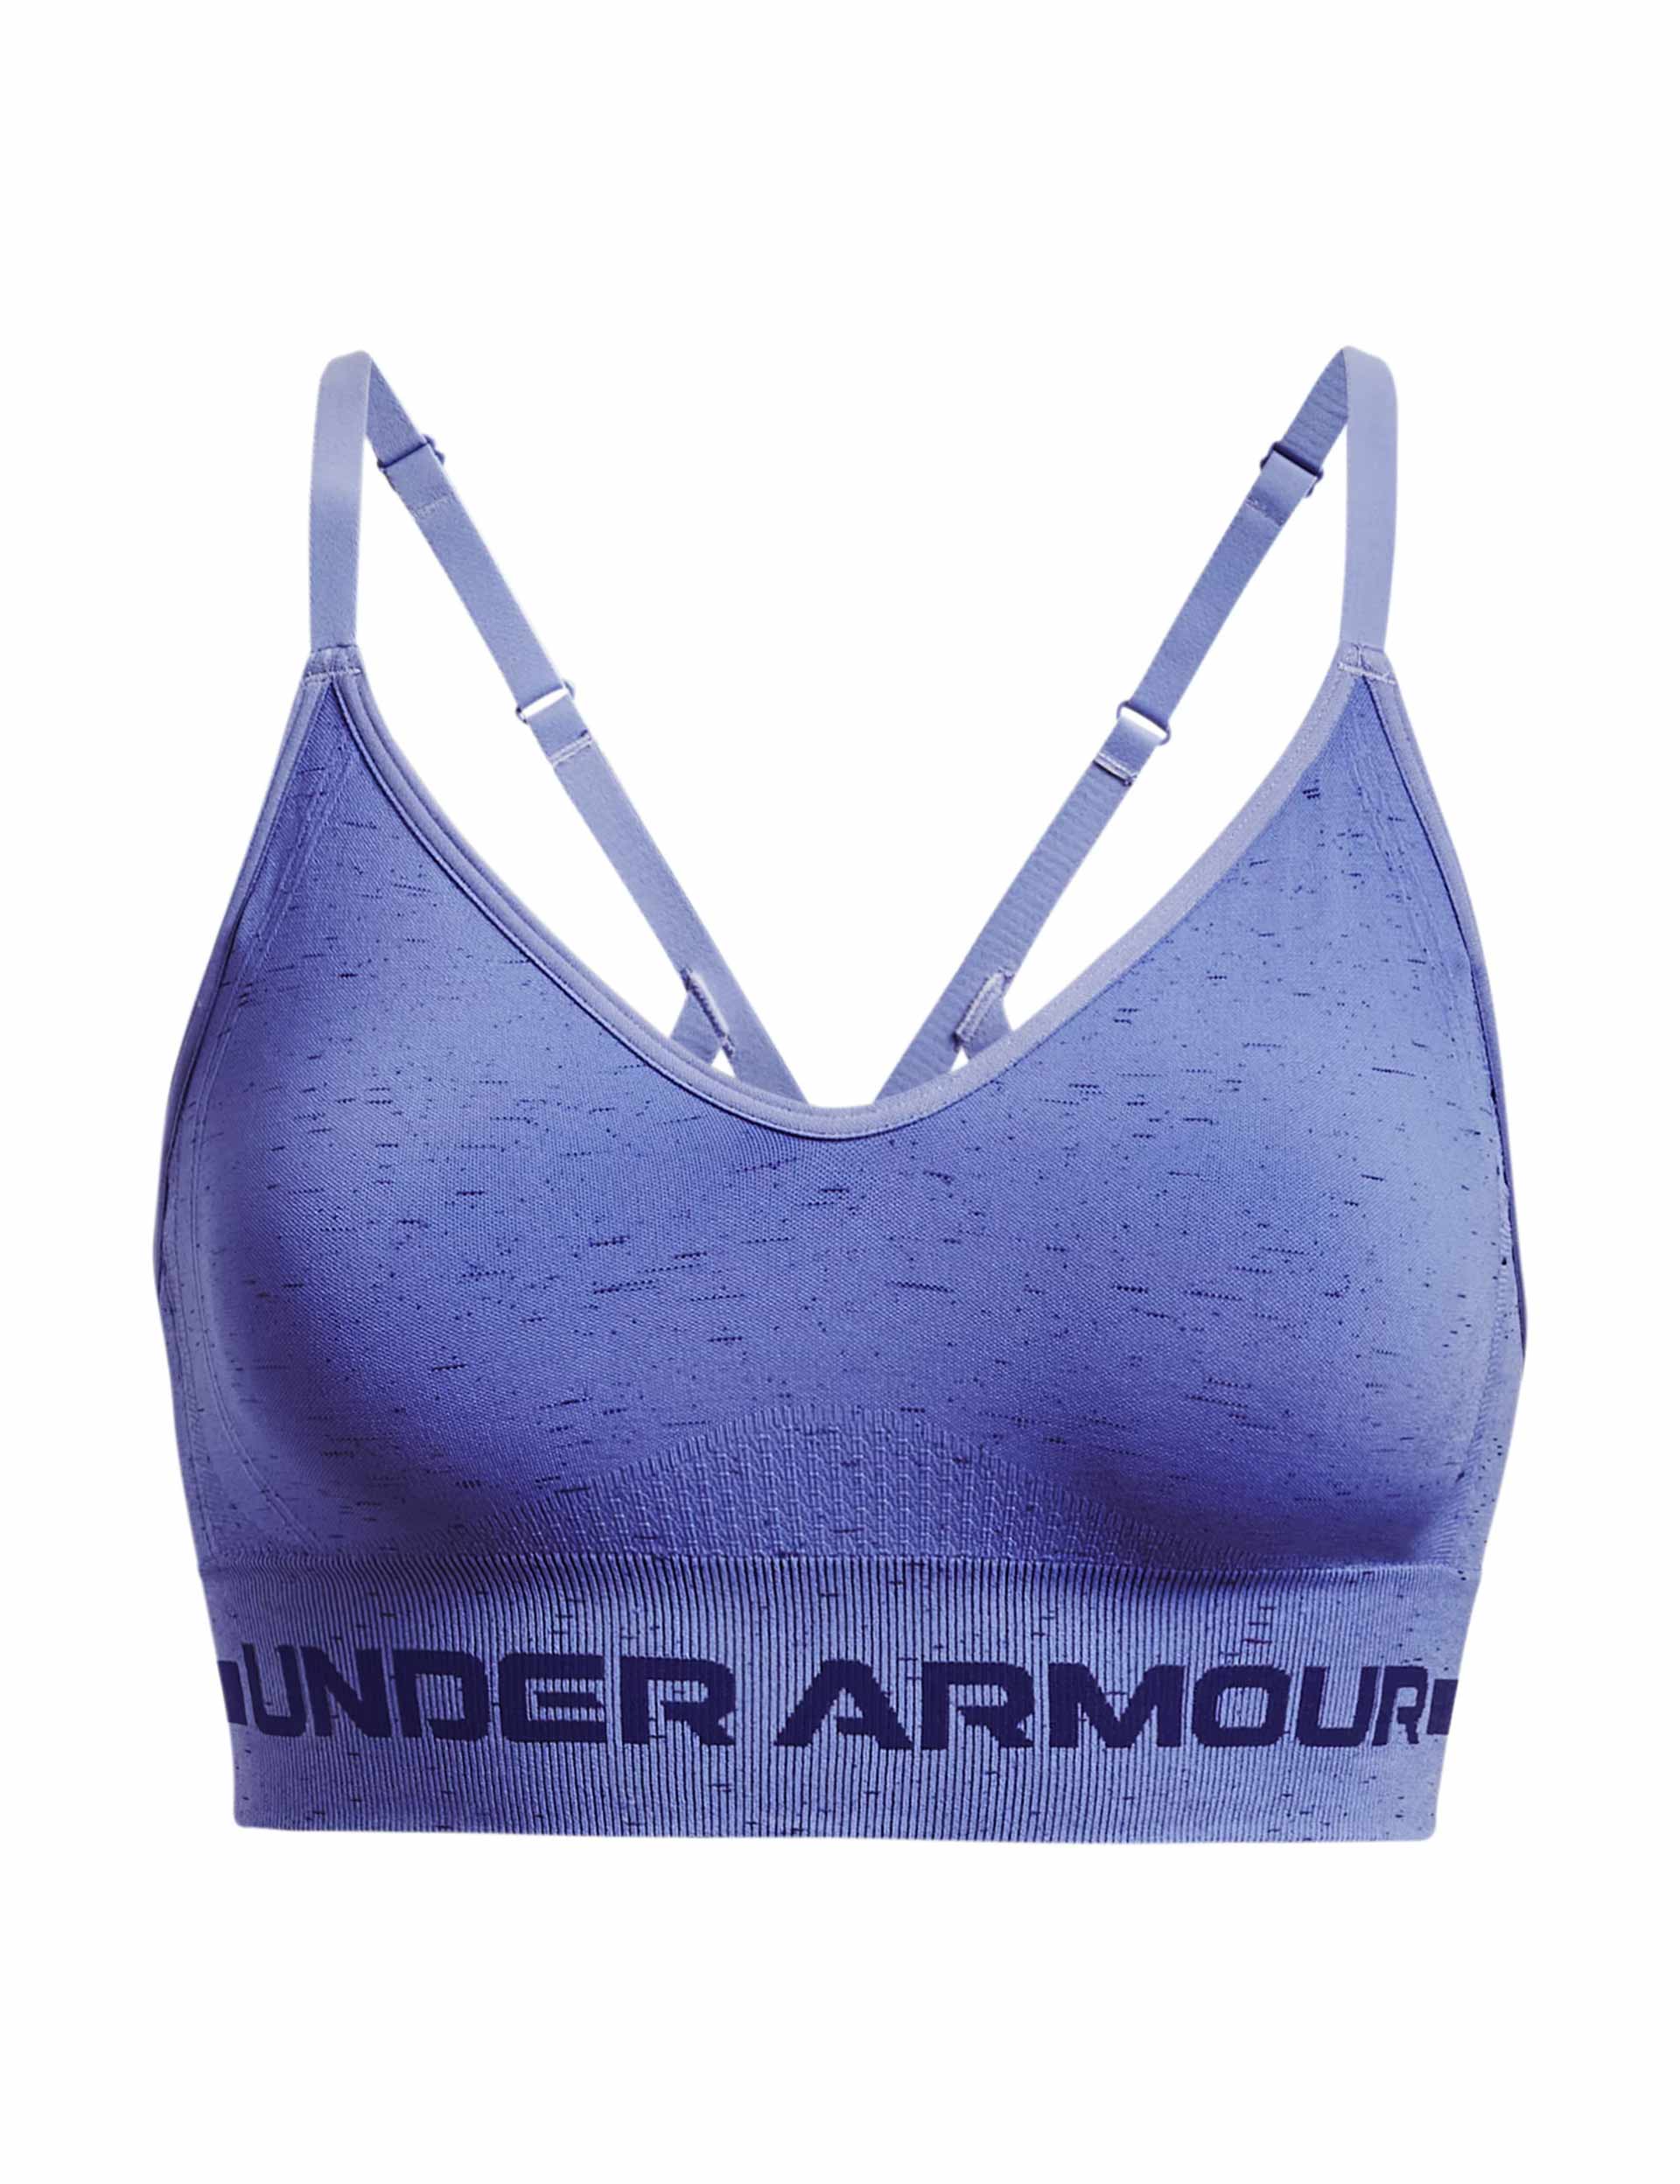 Under Armour Pale Lilac/Pink & Gray Longline Seamless Sports Bra Size L